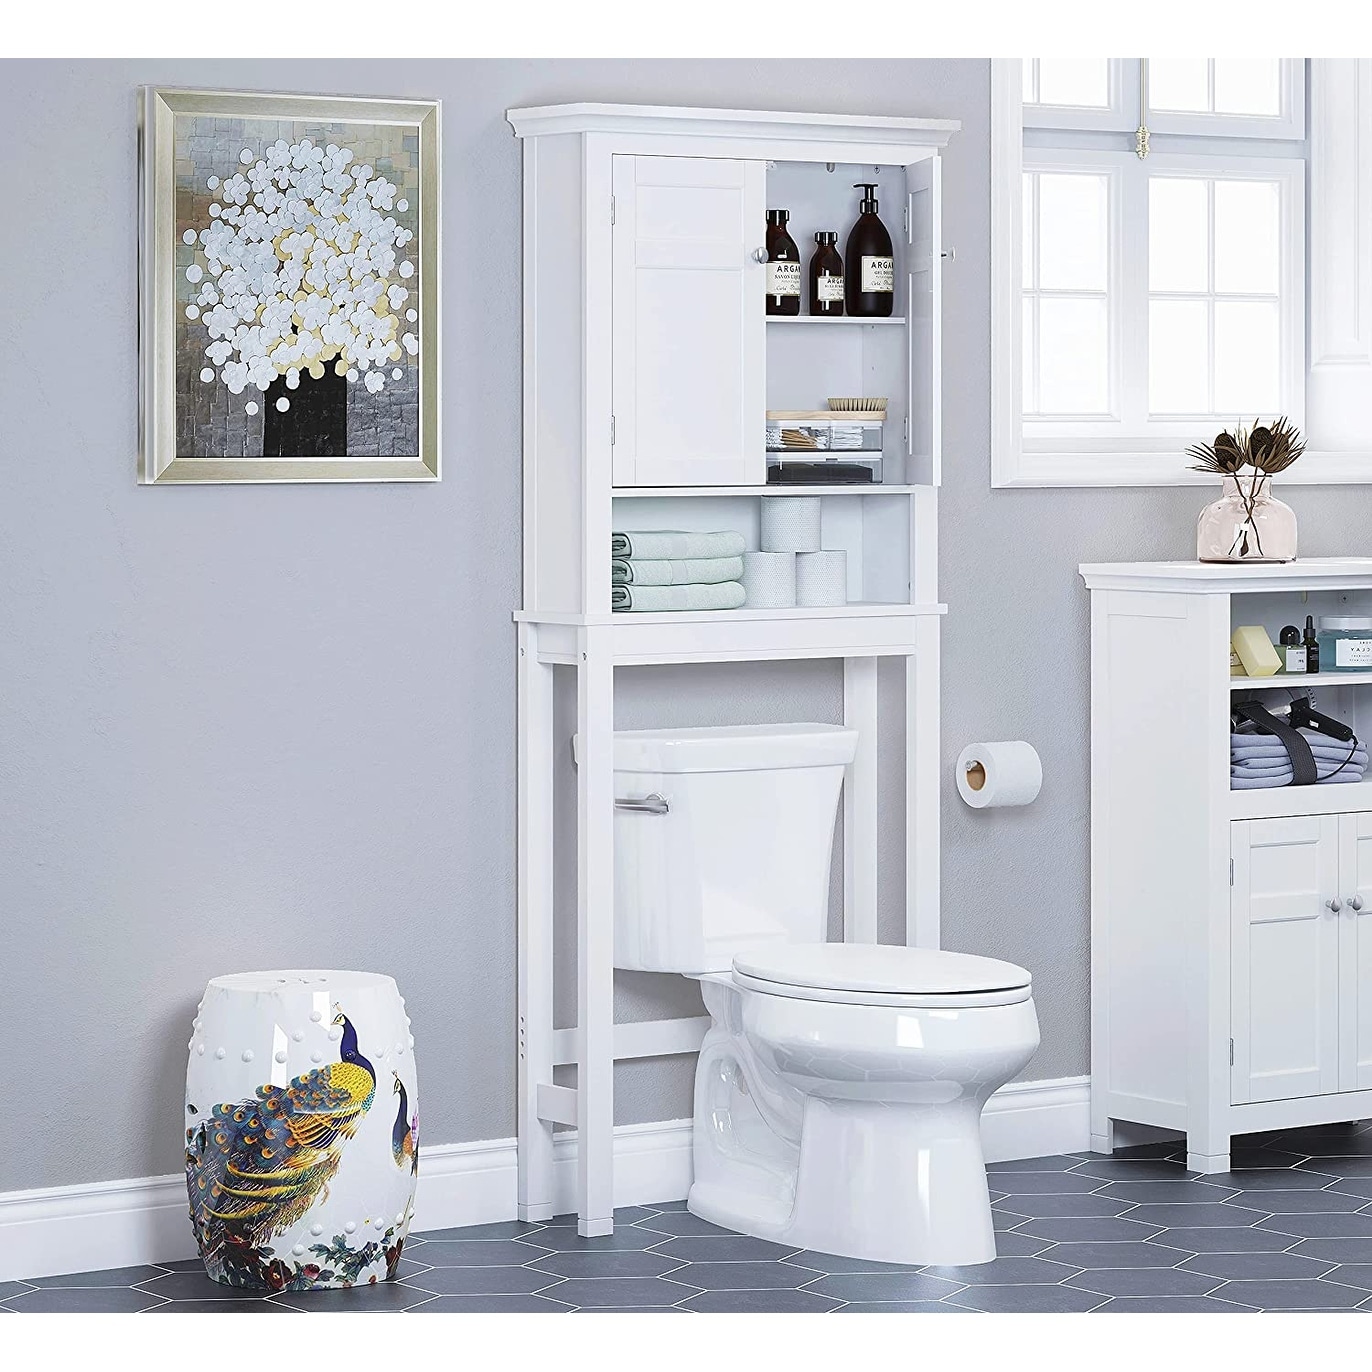 https://ak1.ostkcdn.com/images/products/is/images/direct/46071f7323e4f9a555679e63bdb97181e62ad11d/Spirich-Home-Bathroom-Shelf-Over-The-Toilet%2C-Bathroom-SpaceSaver%2C-Bathroom-Bathroom-Storage-Cabinet-Organizer%2C-White-with-Drawer.jpg